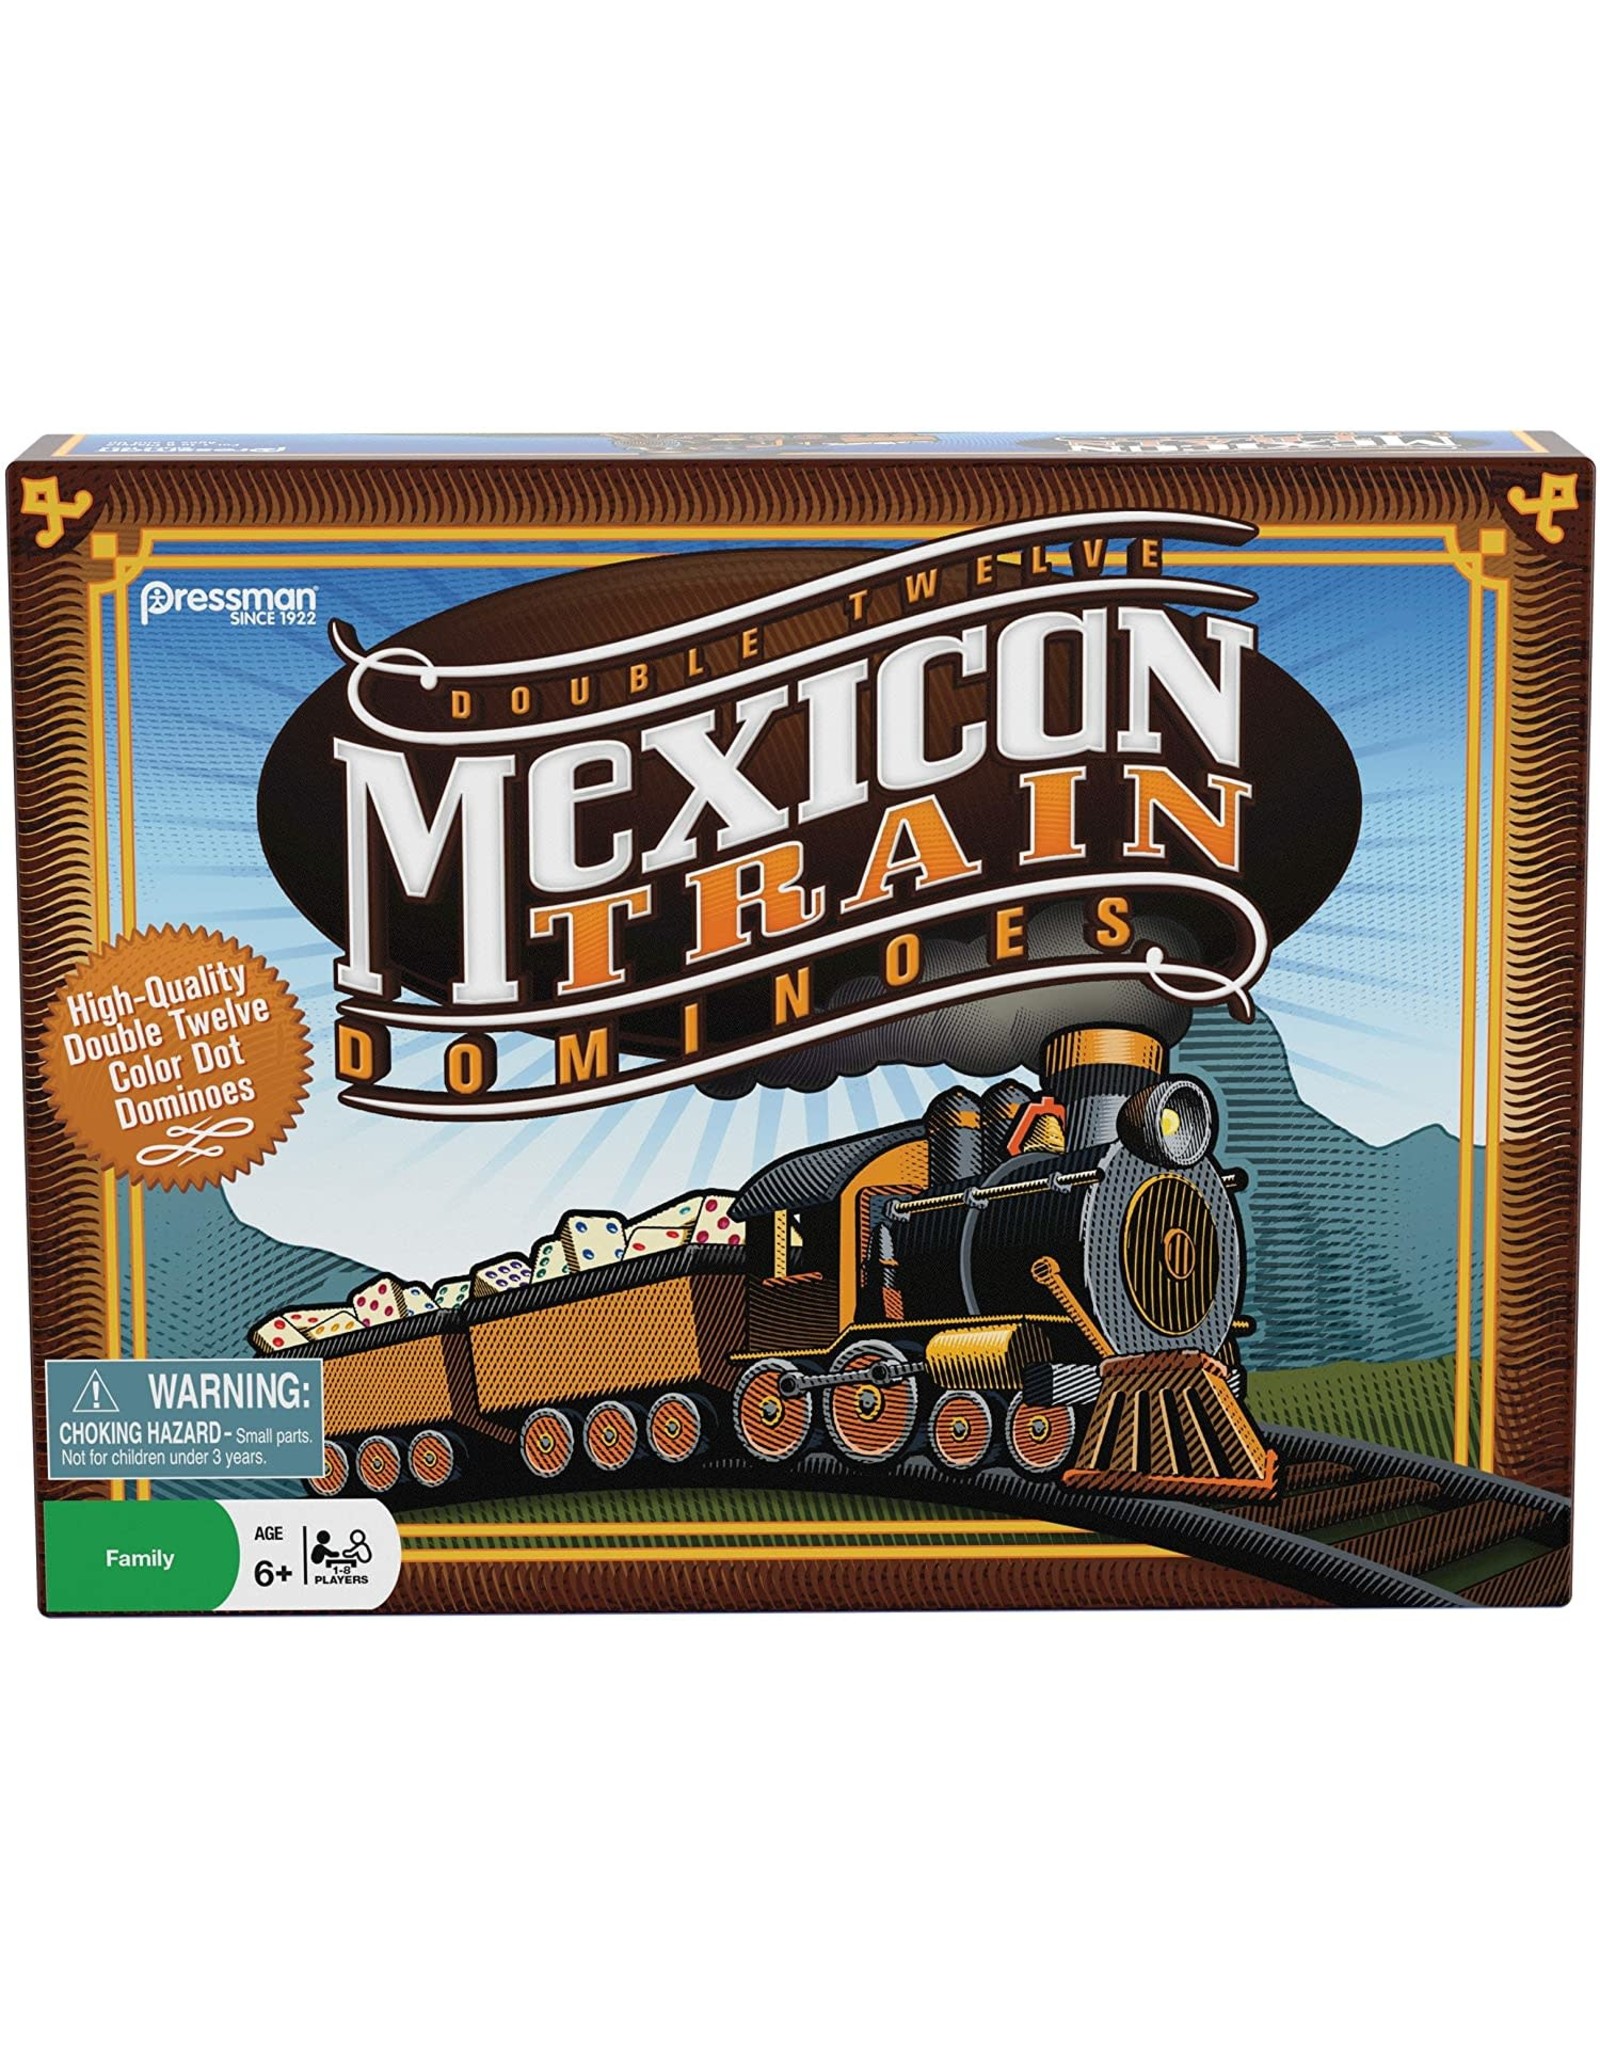 Press Man Mexican Train Dominoes